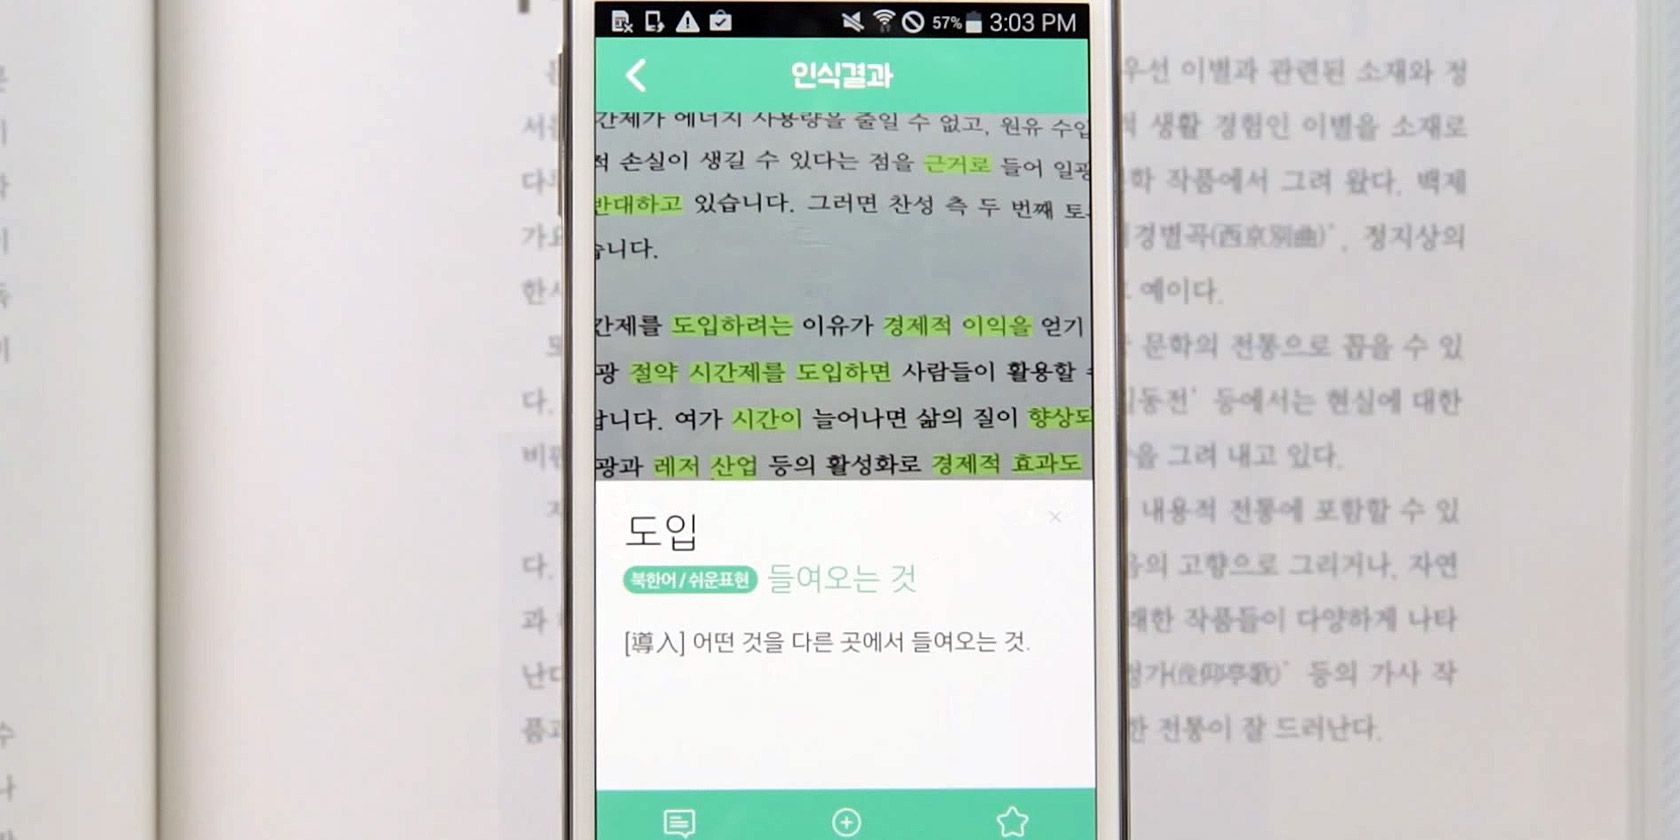 north-korean-defectors-app